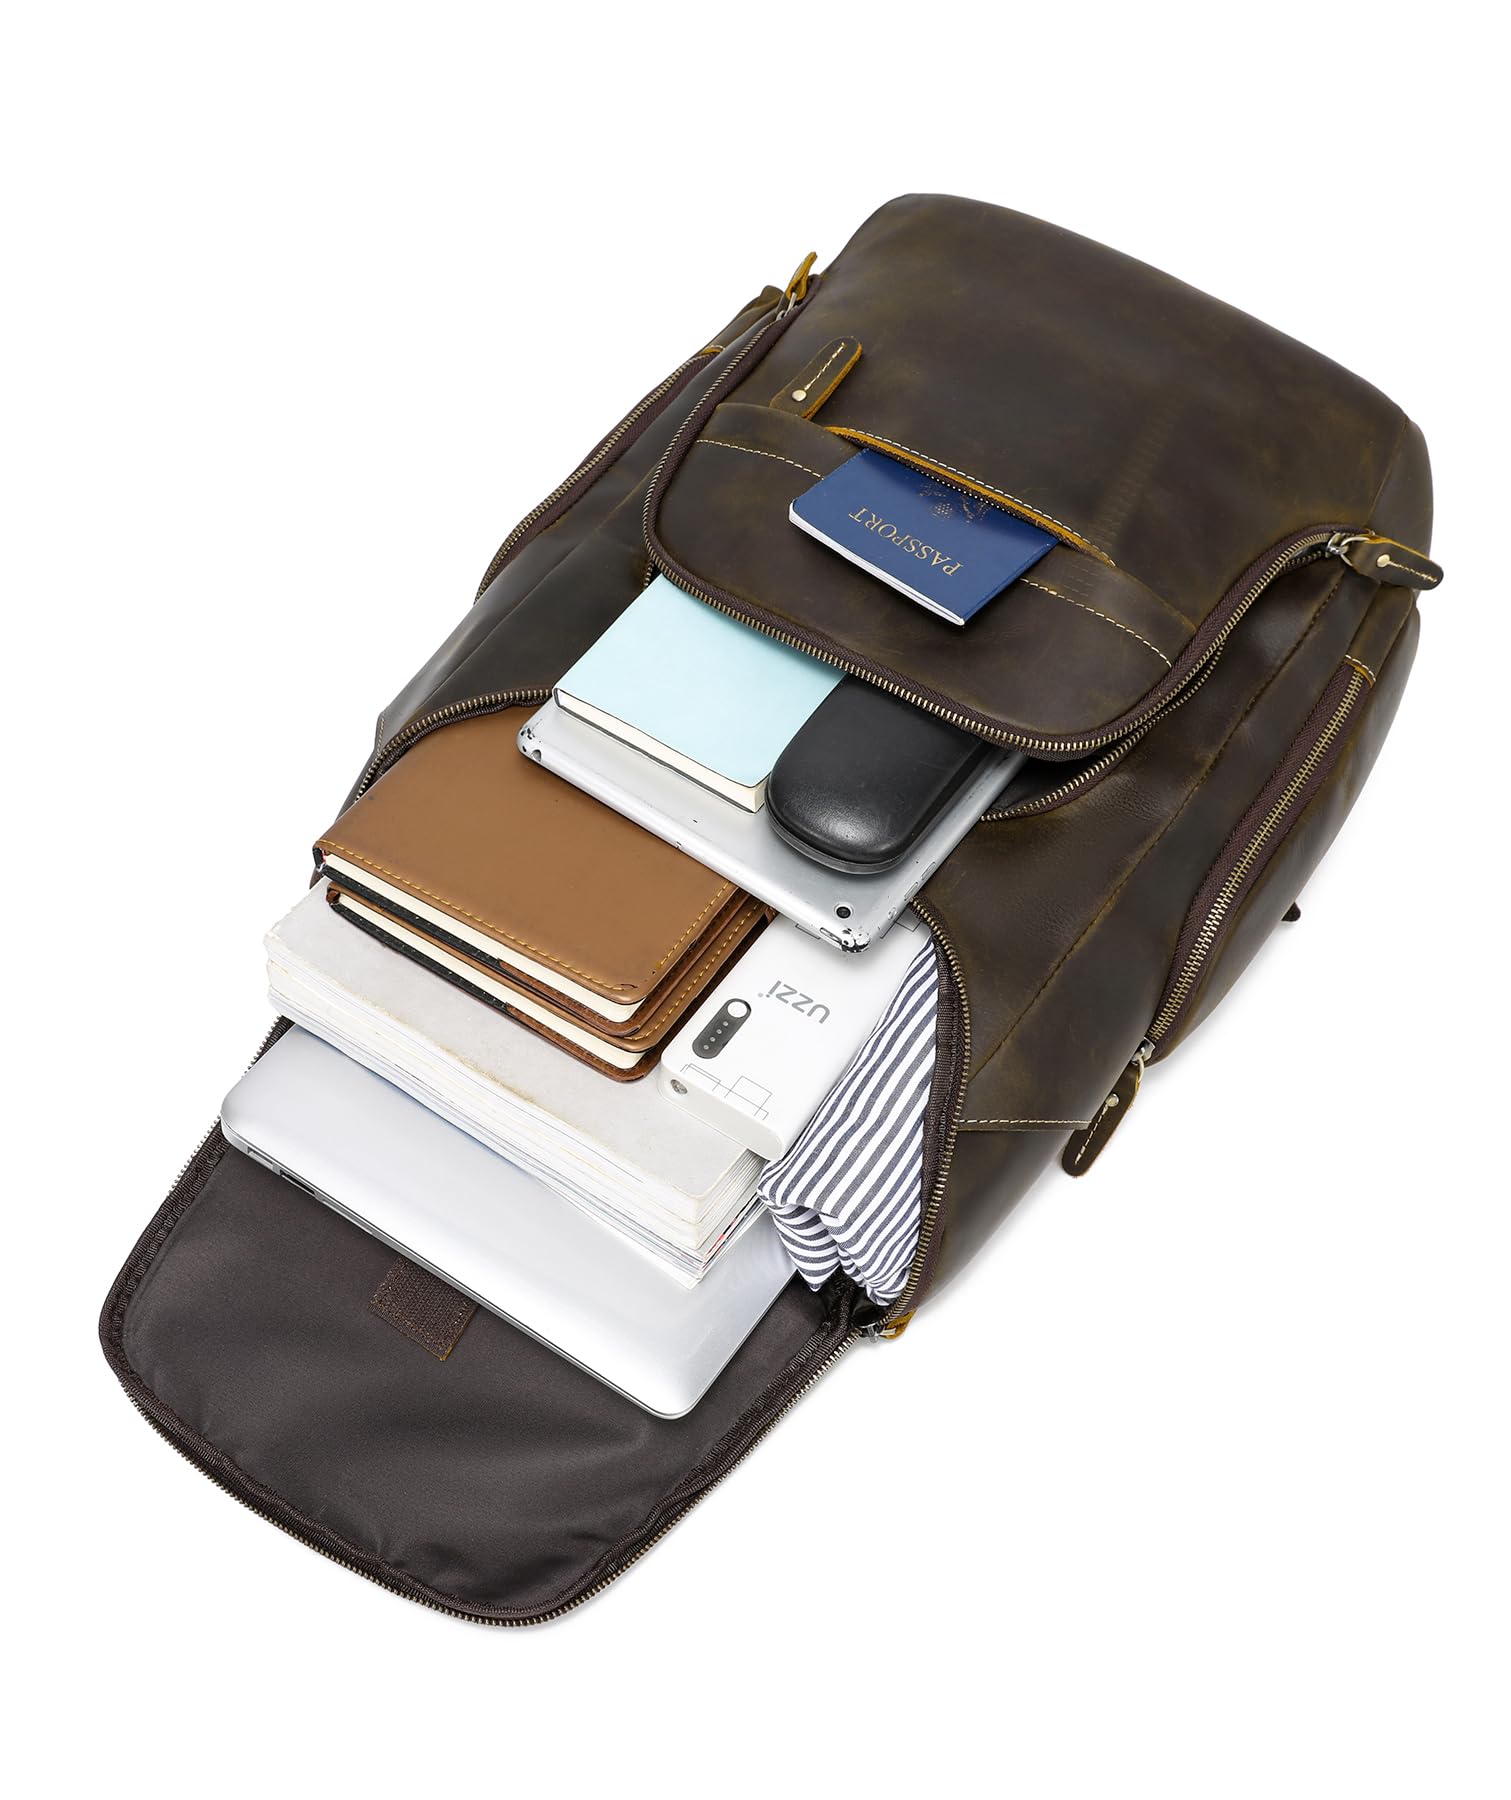 LANNSYNE Retro Distressed Cowhide Leather Backpack for Men fits 16" Laptop Rucksack Travel Weekender Daypack